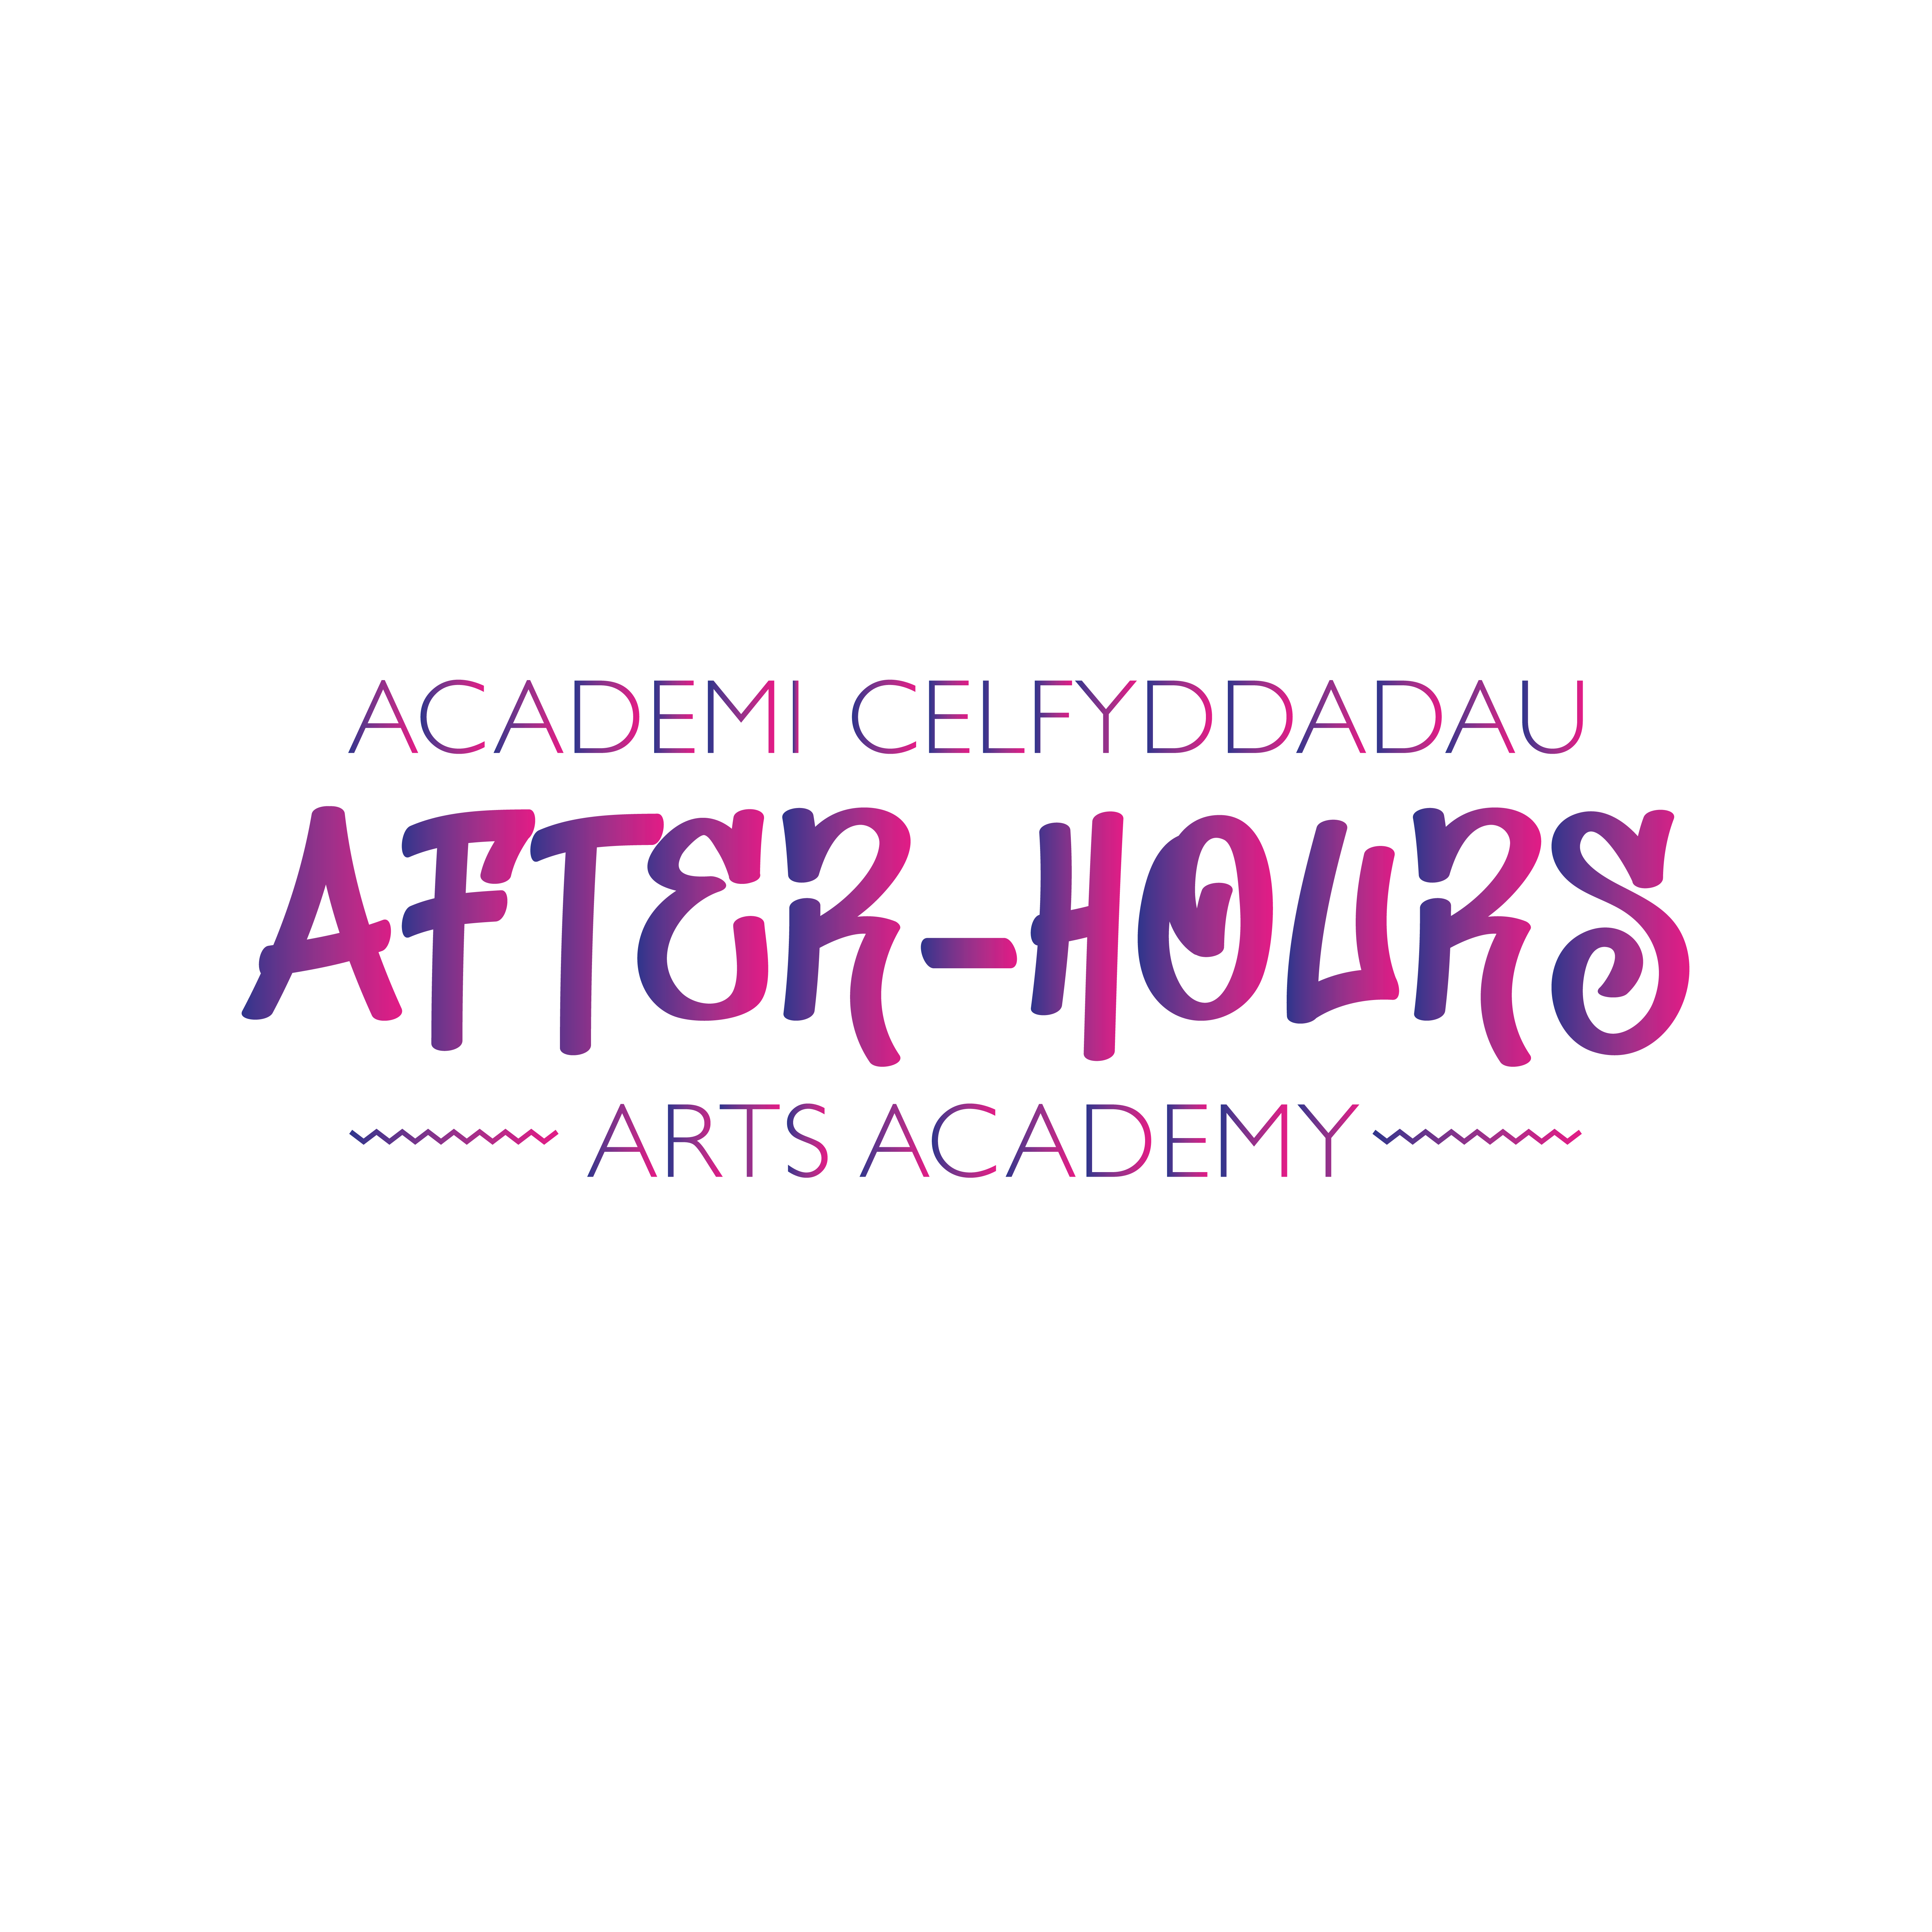 After Hours Arts Academy Logo White Bgrnd